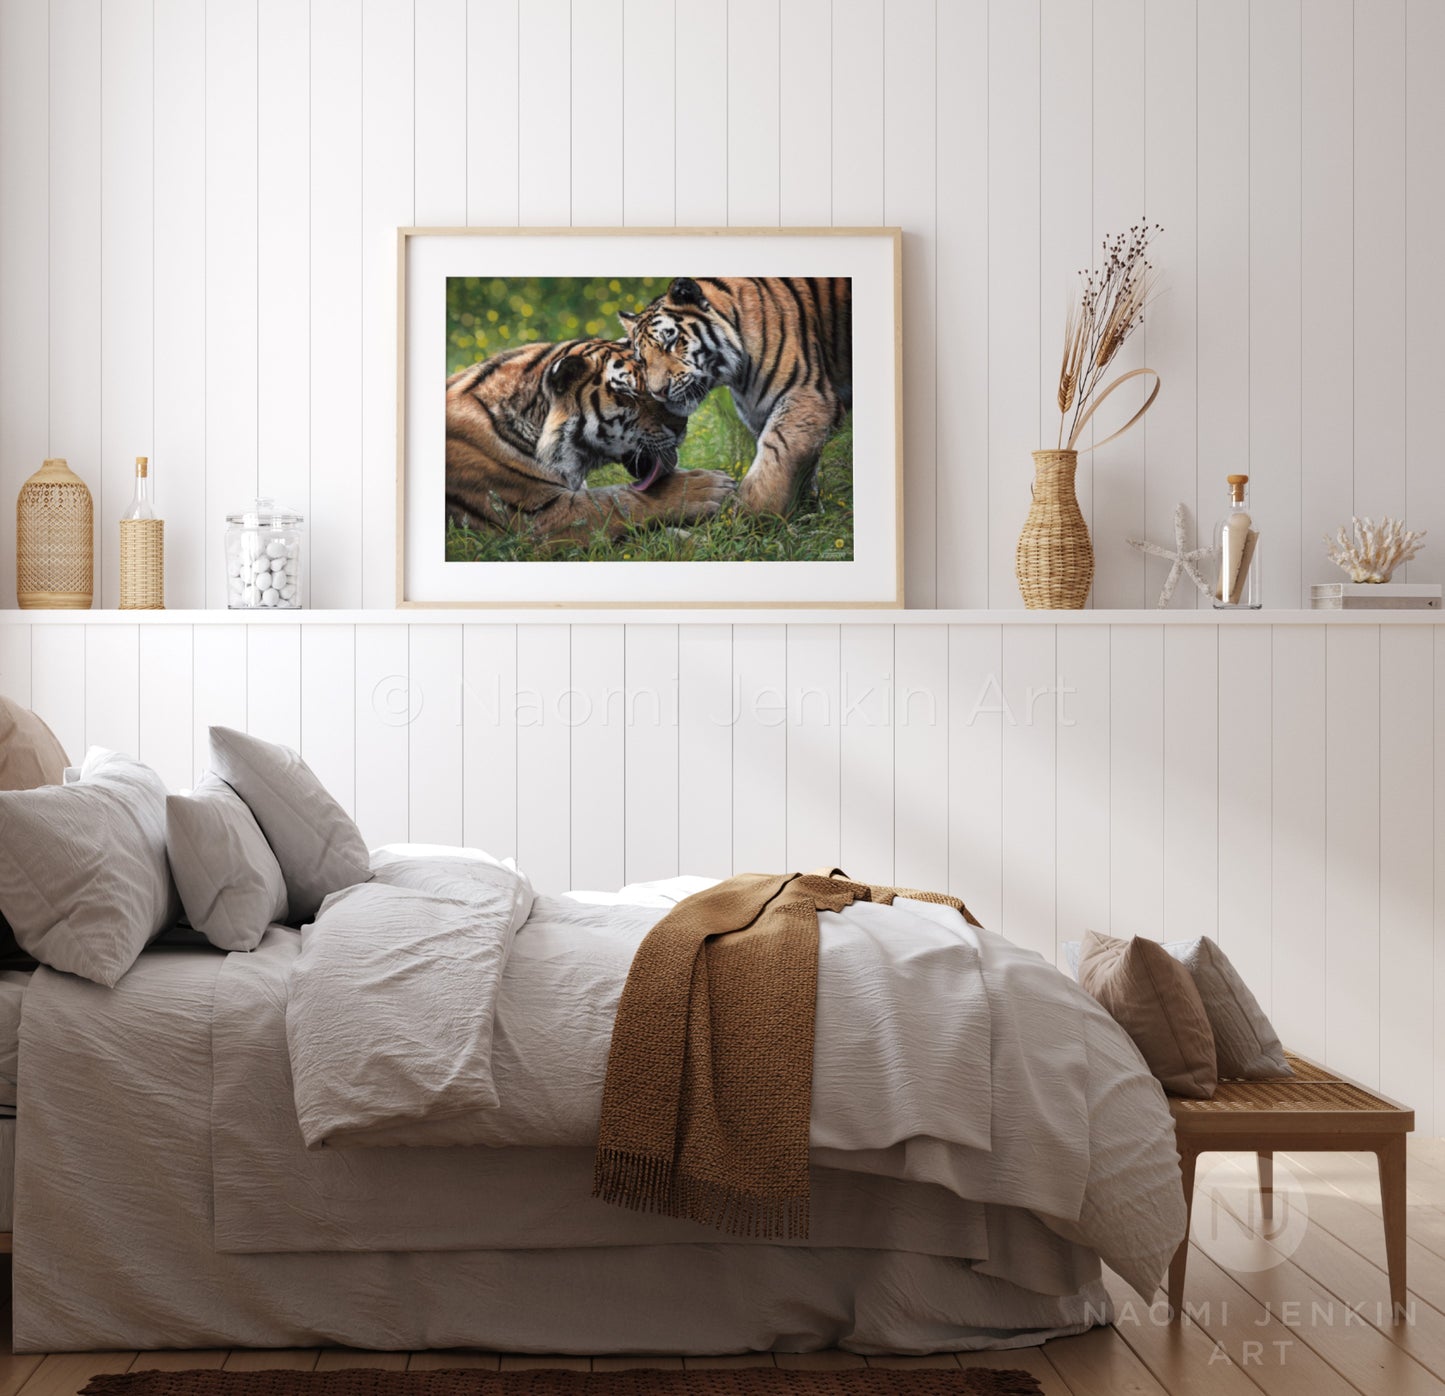 Framed tiger art print in a bedroom setting by Naomi Jenkin Art